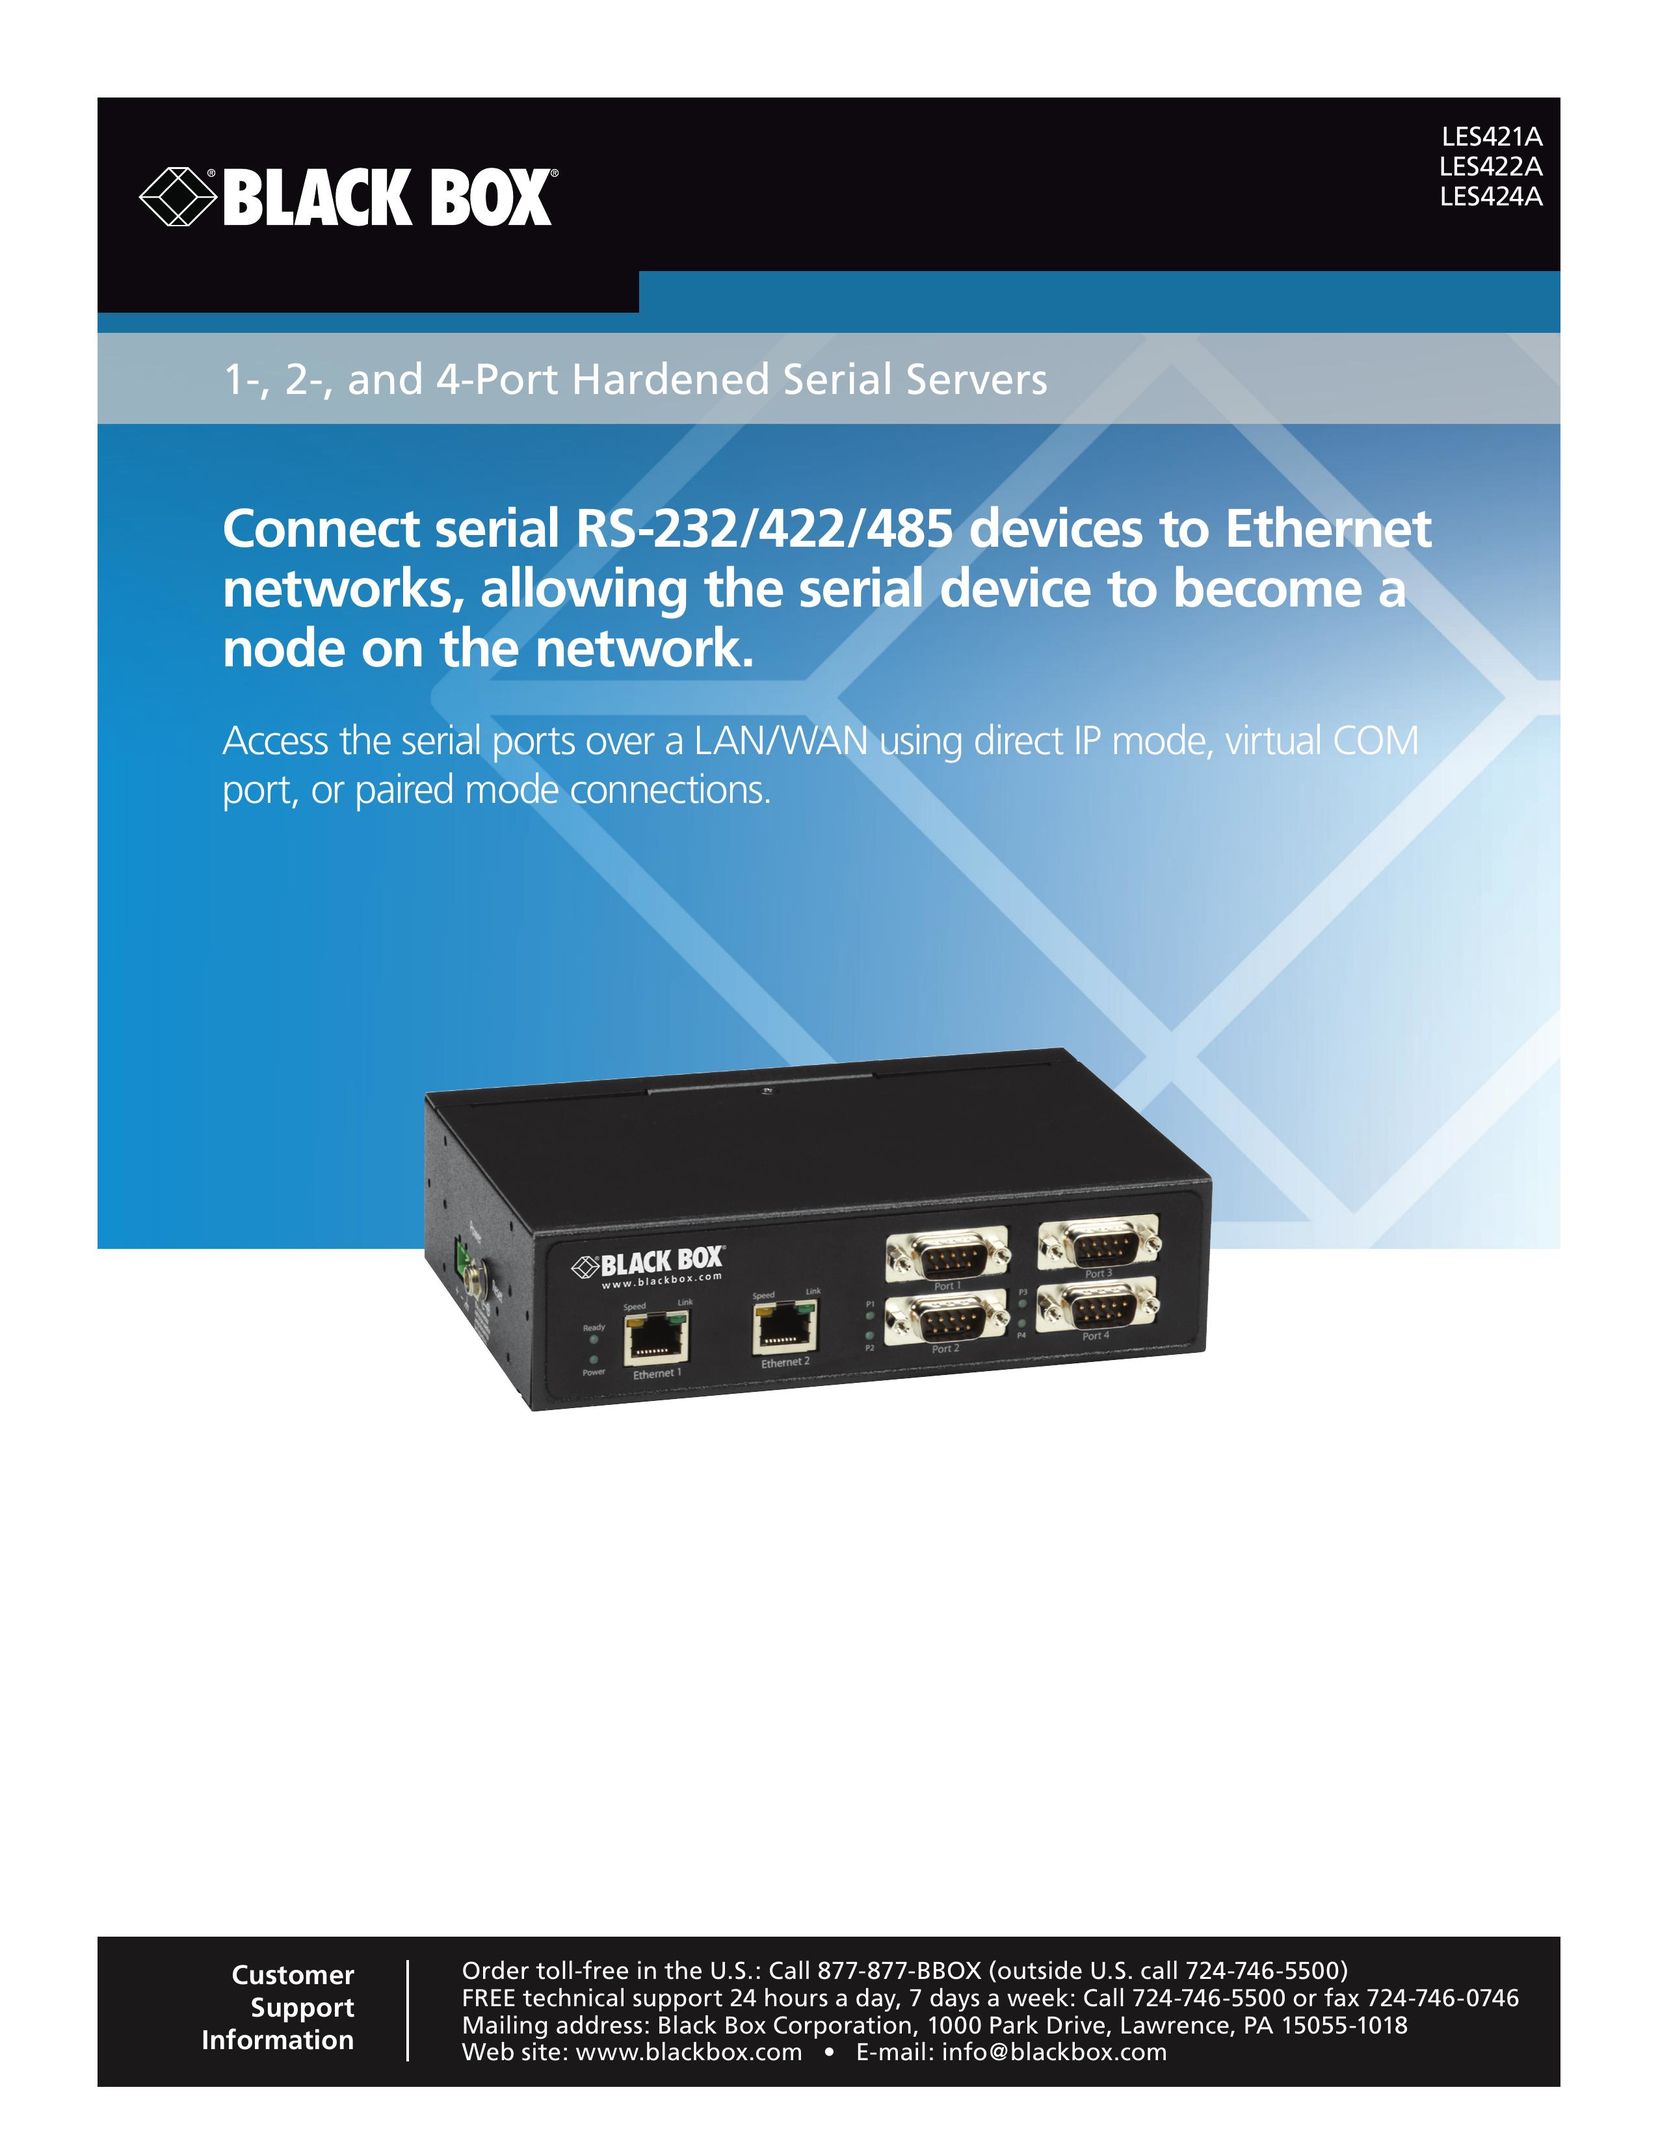 Black Box 1-, 2-, and 4-Port Hardened Serial Servers Laser Pointer User Manual